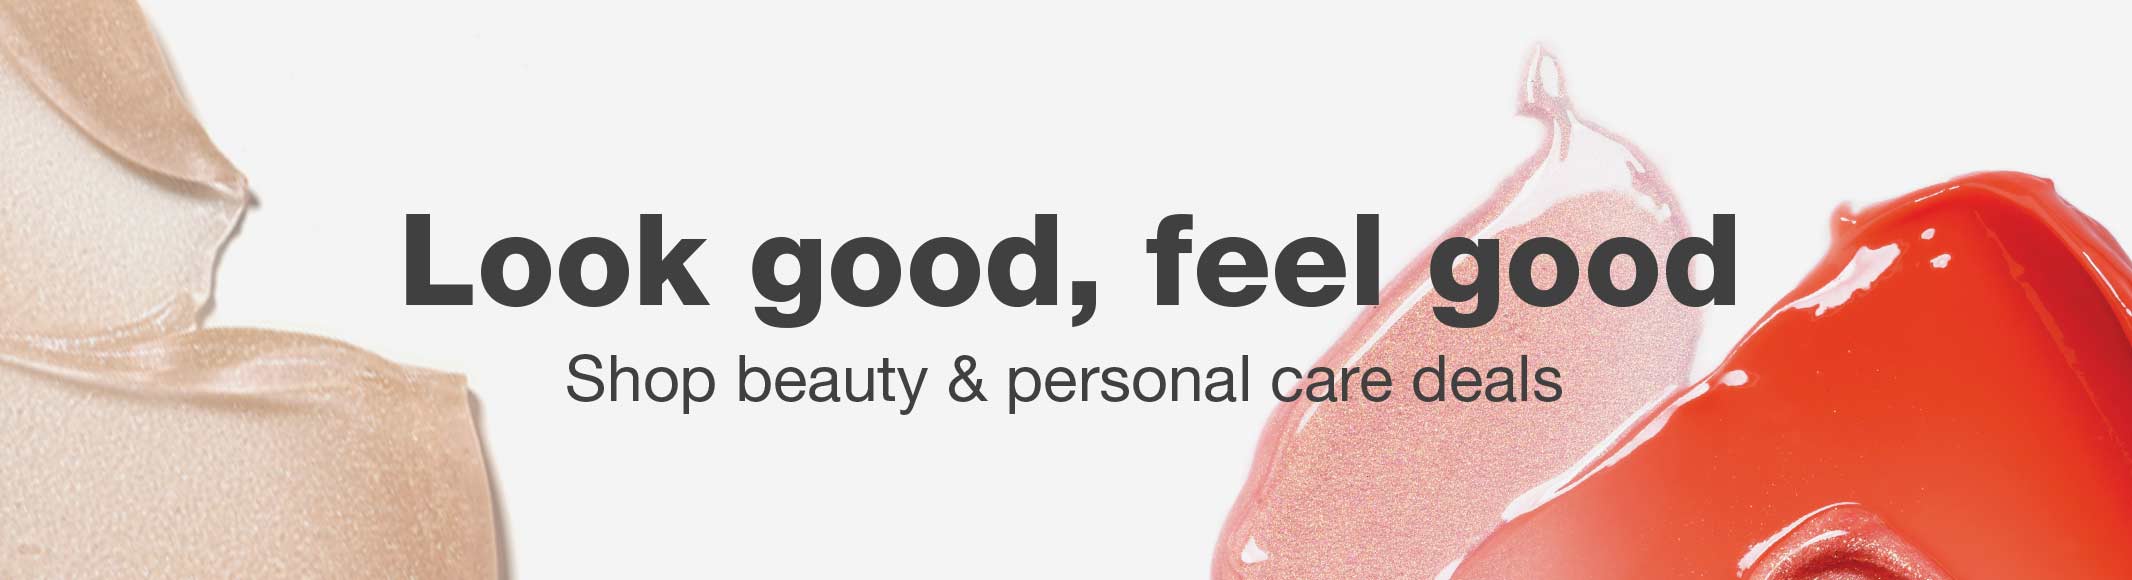 Look good, feel good. Shop beauty & personal care deals.